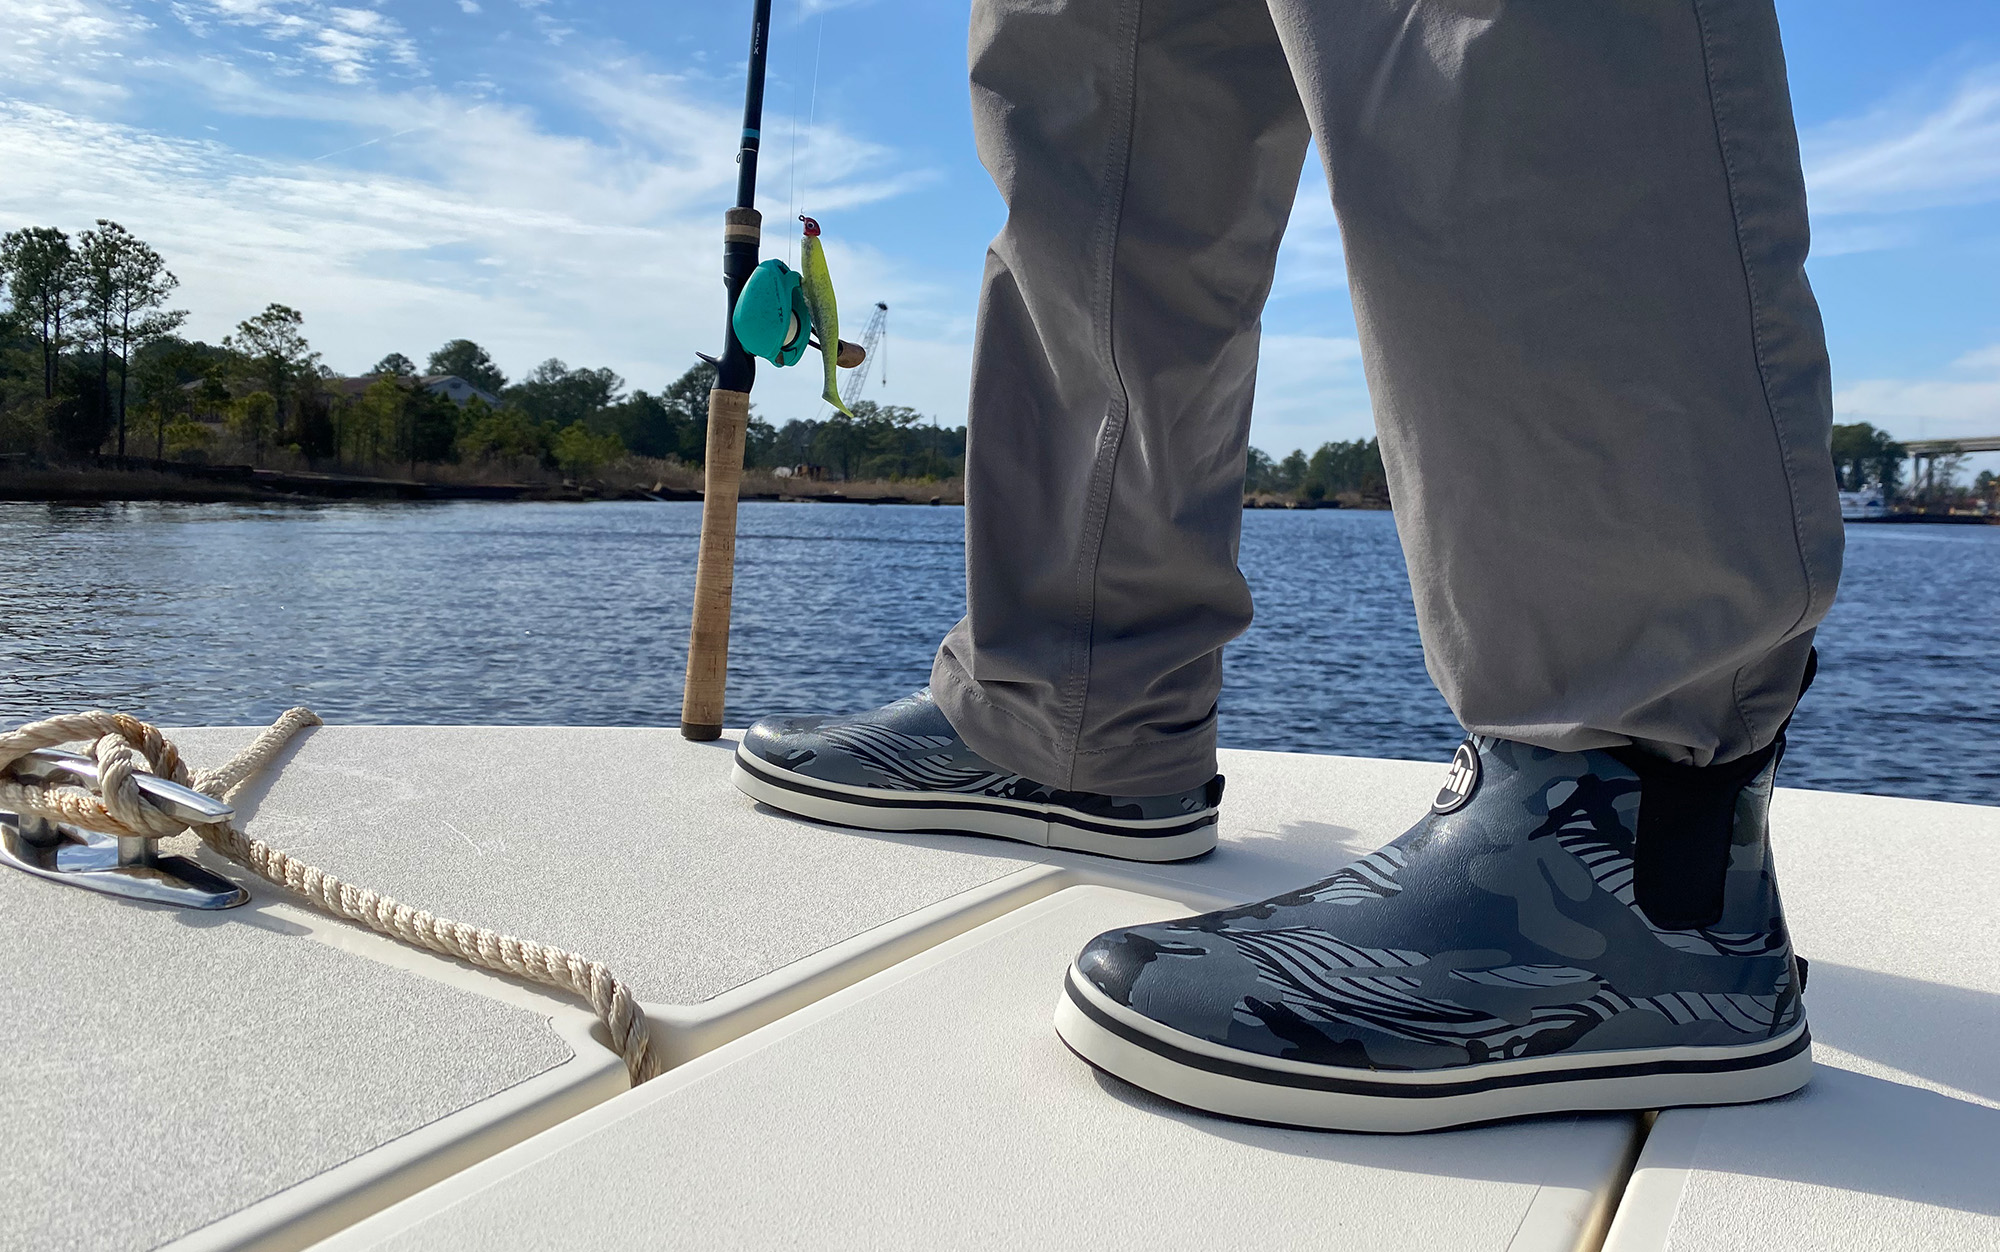 Fly Fishing Wading Shoes & Pants Aqua Sneakers Clothing Set